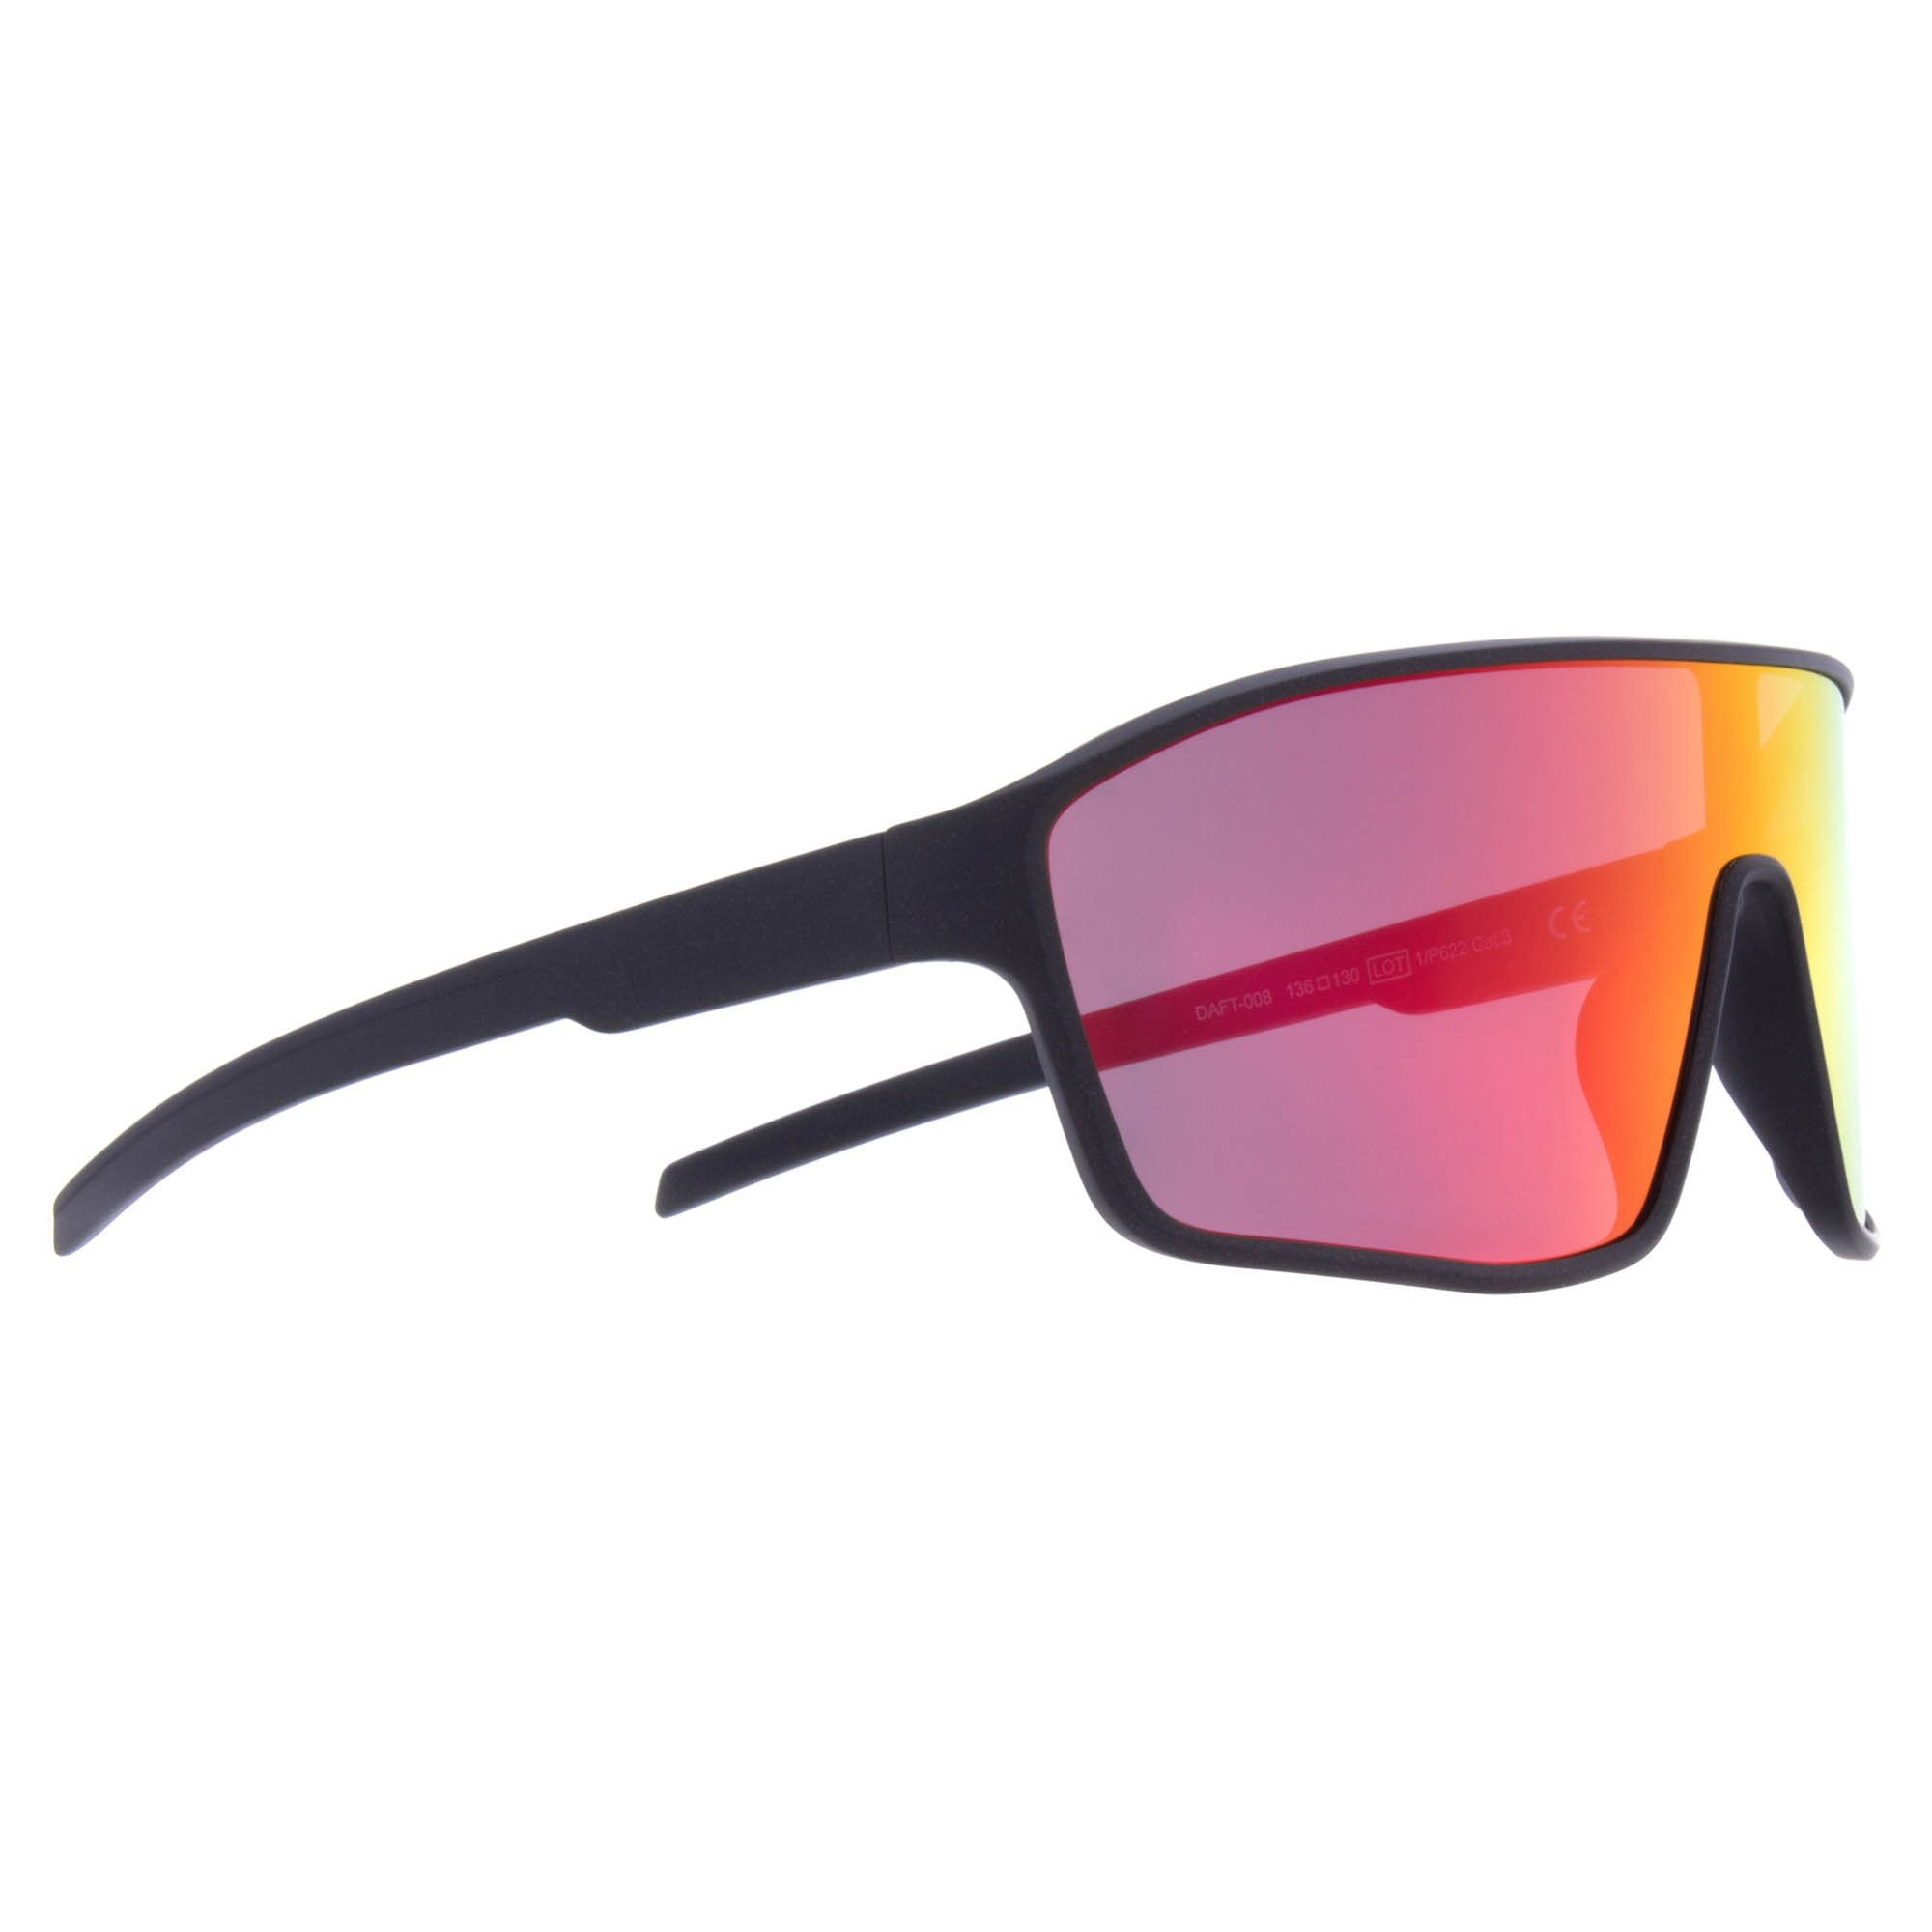 Sunglasses Daft-008